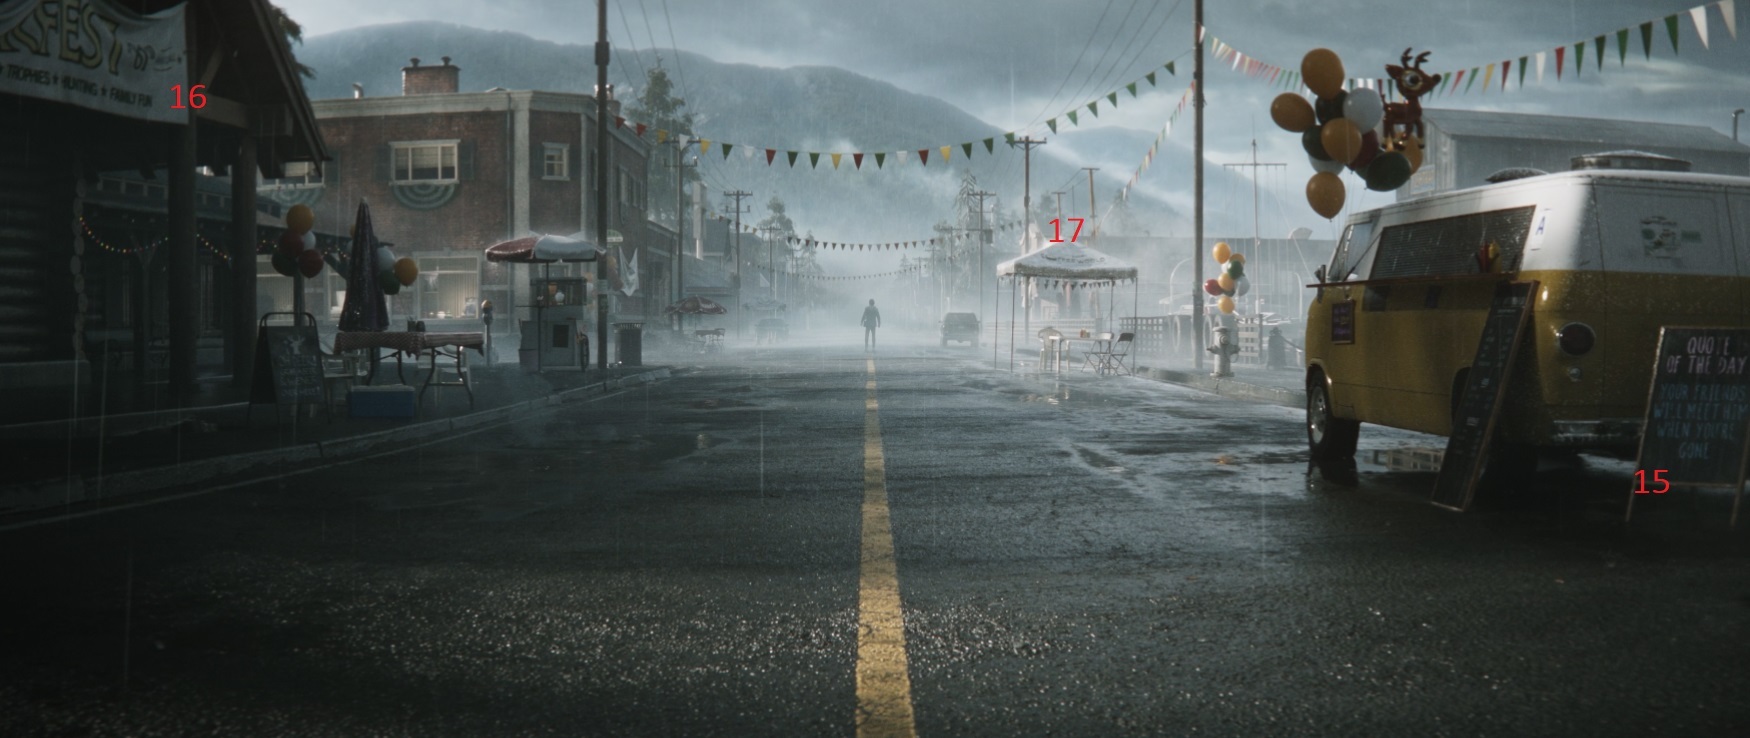 Is The Alan Wake 2 Trailer Teasing A Trilogy? - GameSpot